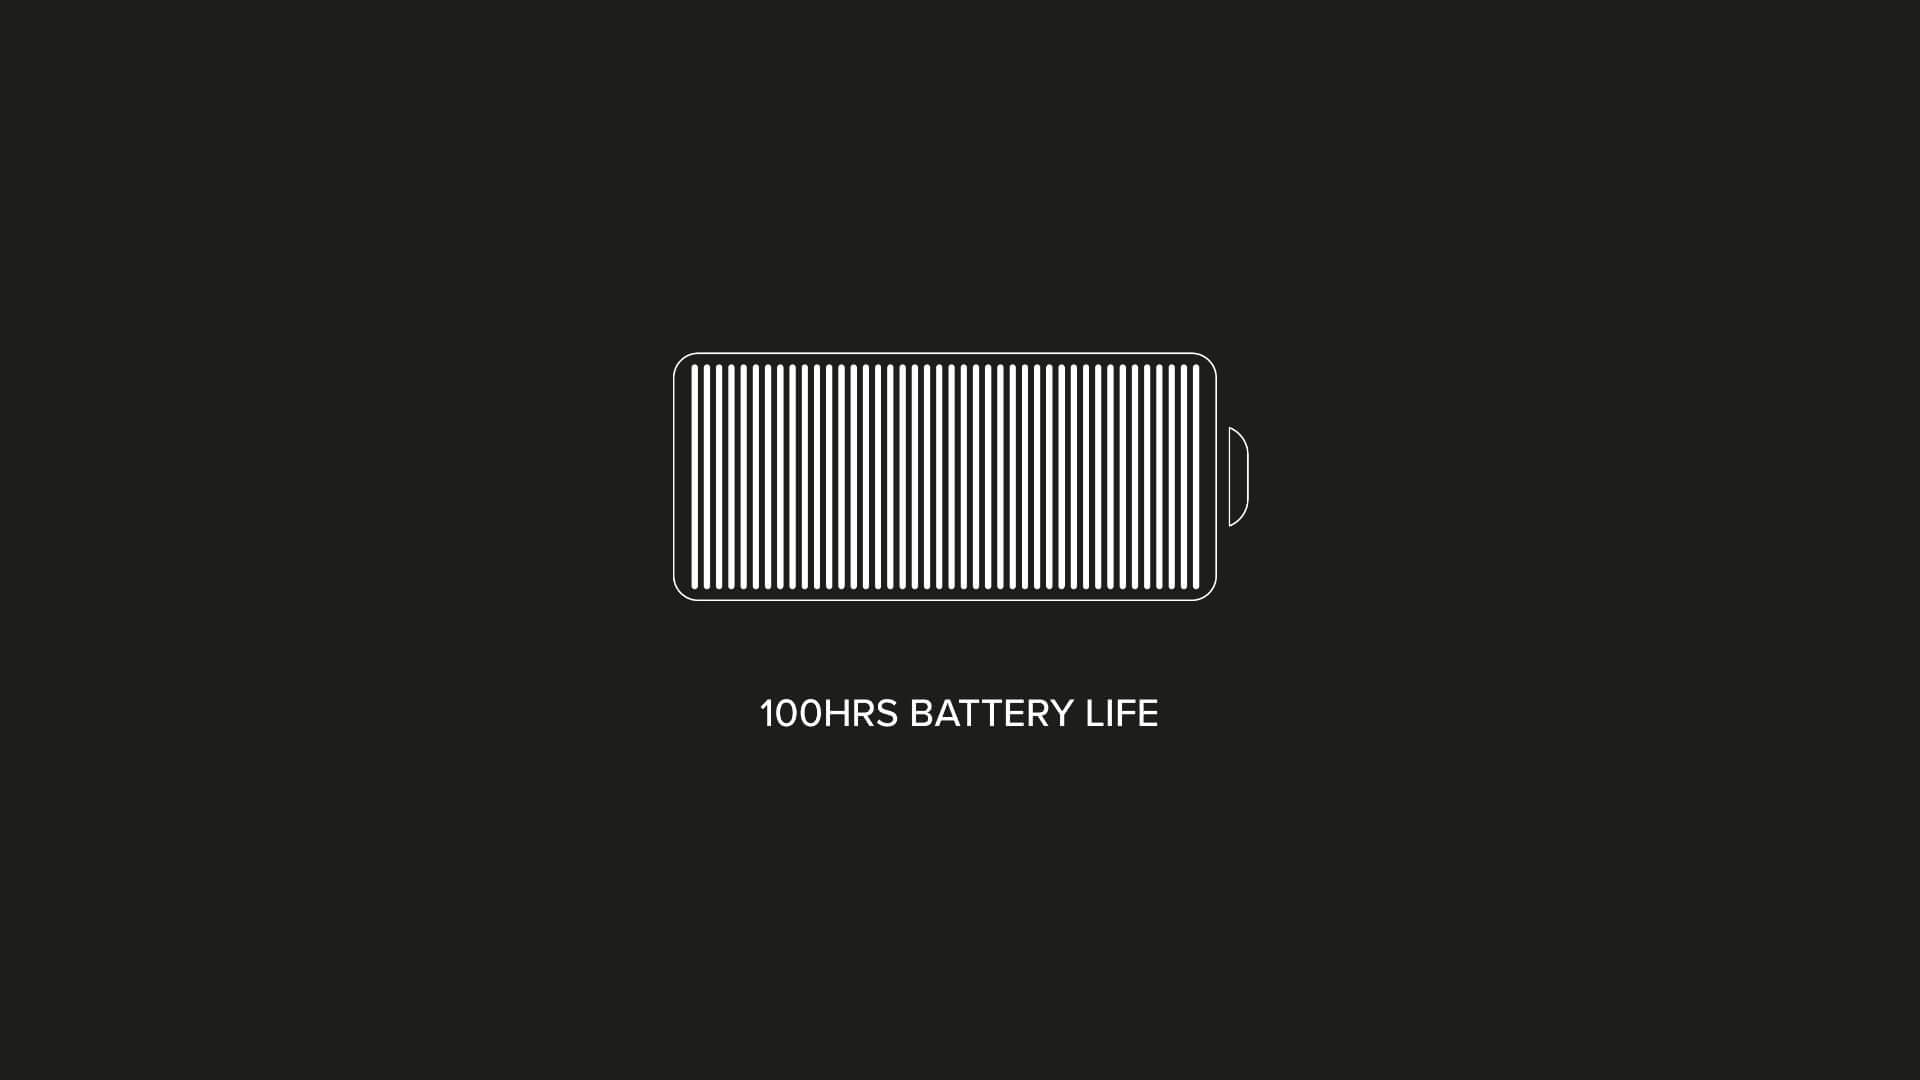 Minirig 3 battery life